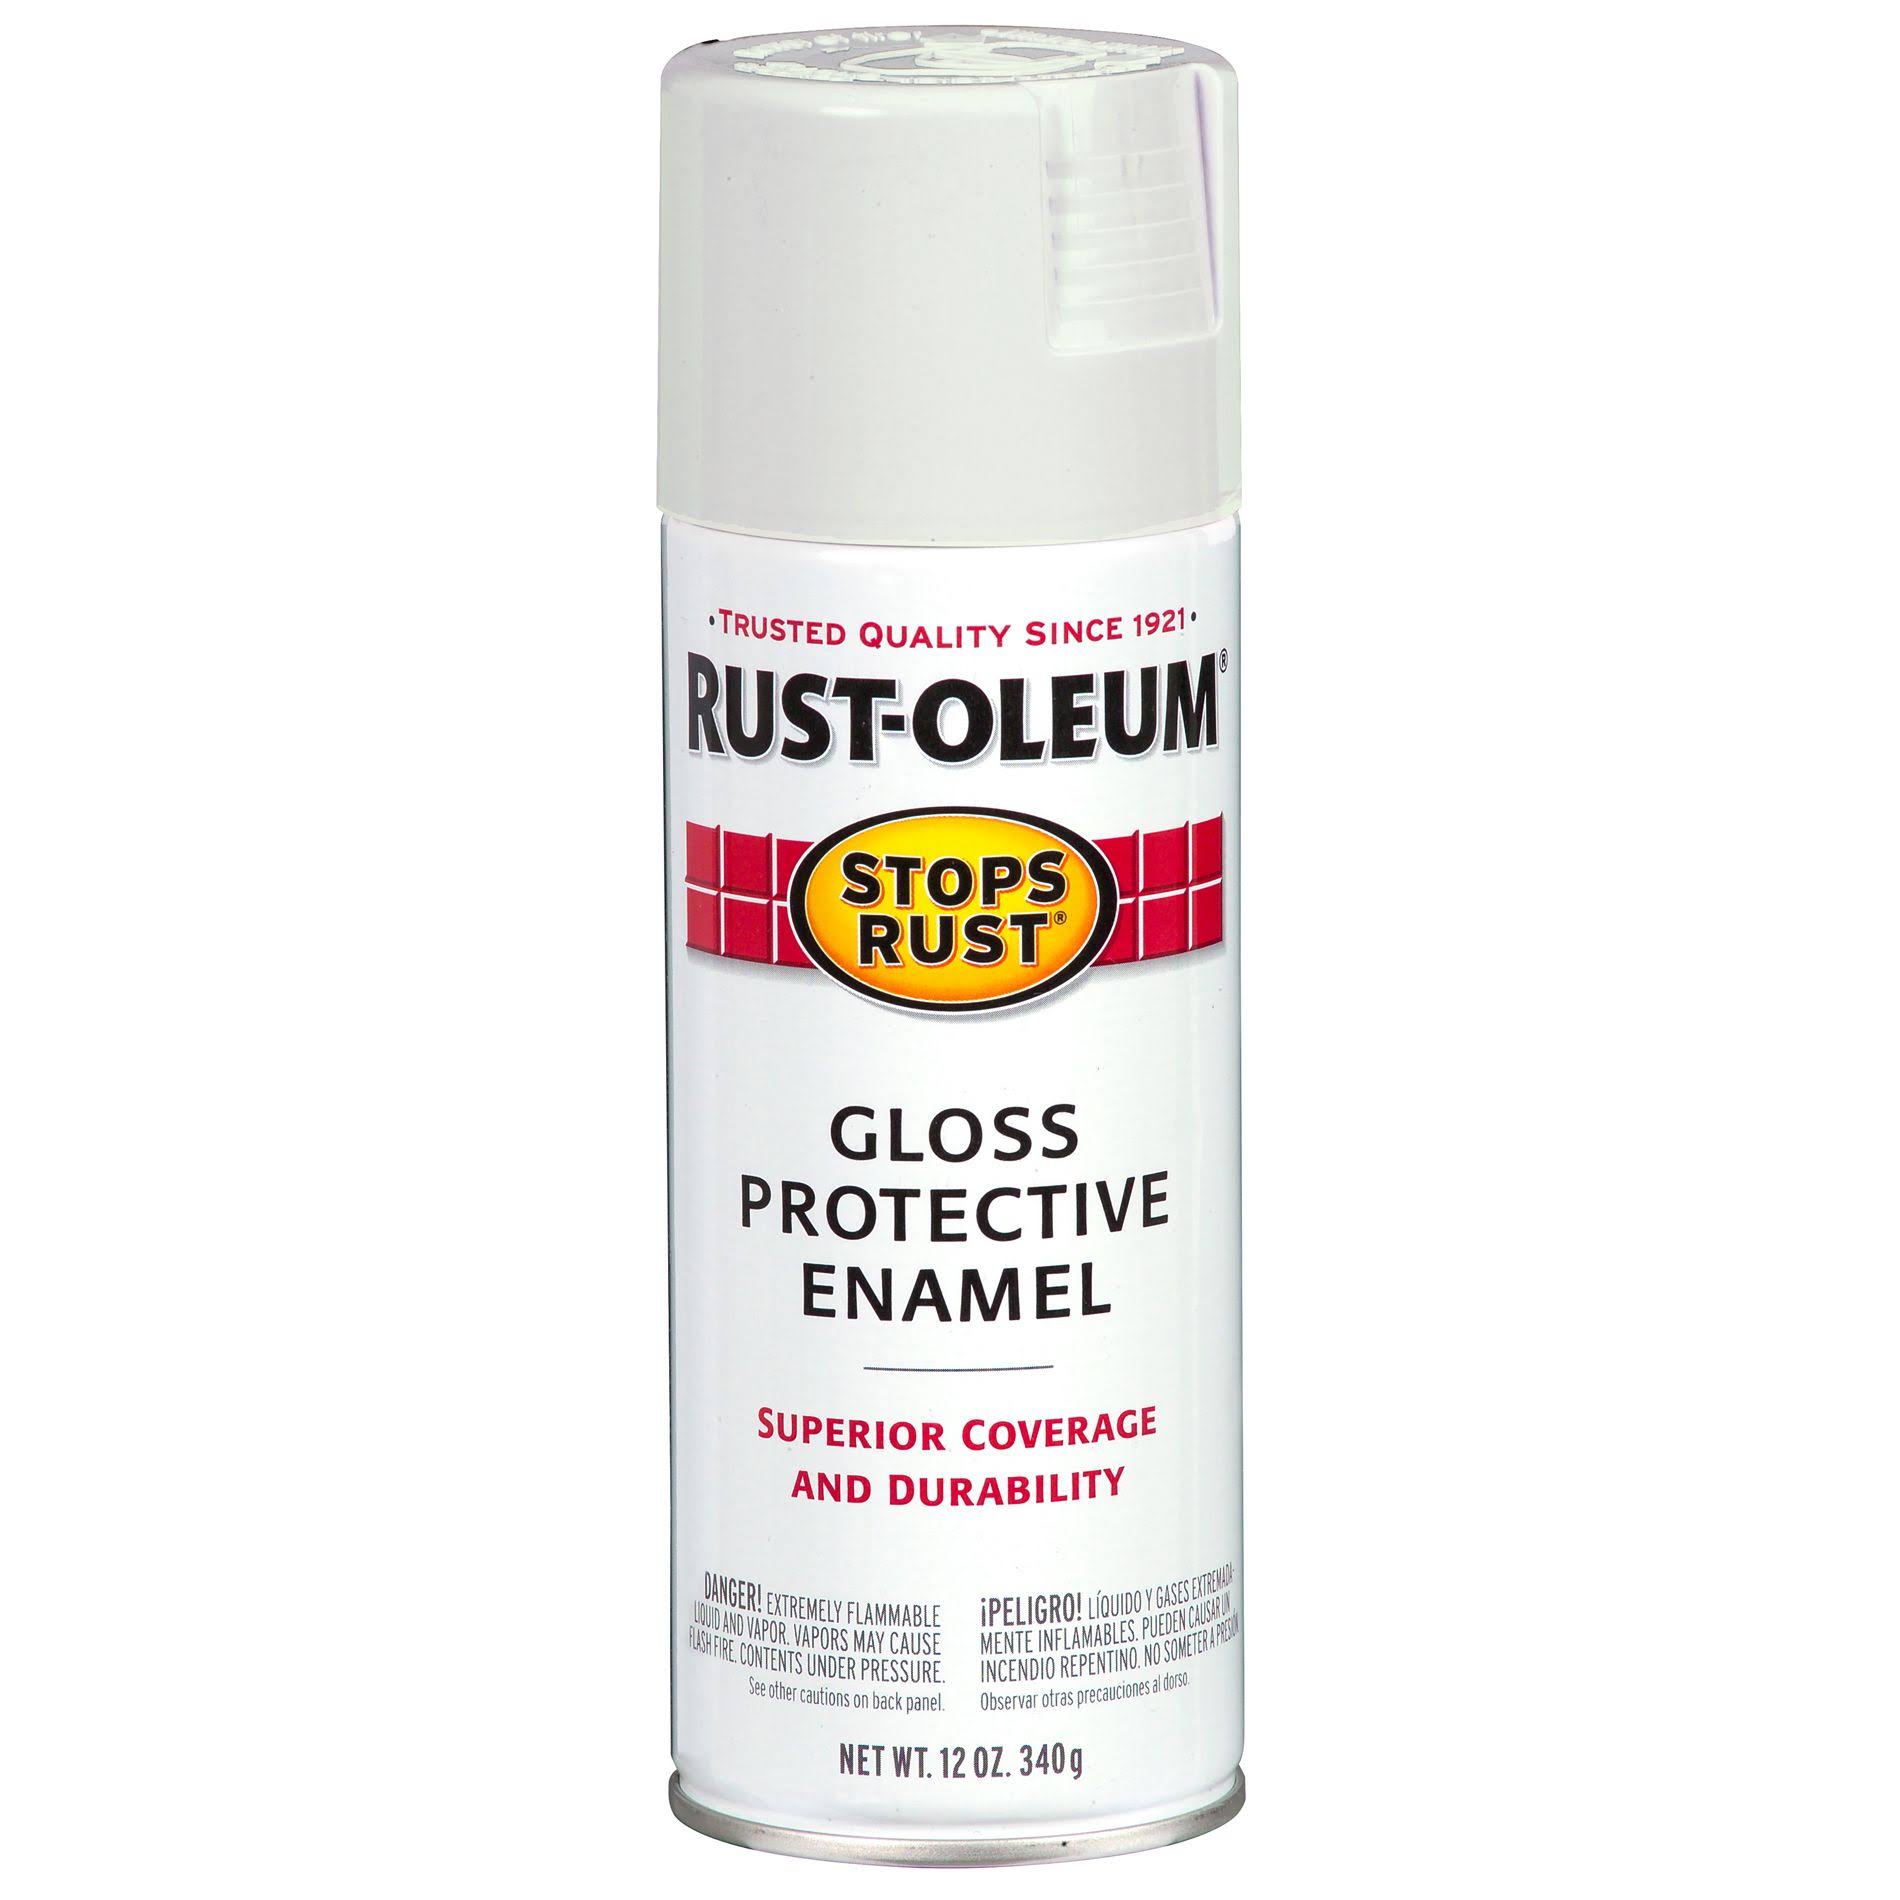 Rust-Oleum 250702 Stops Rust Spray Paint - Gloss Pure White